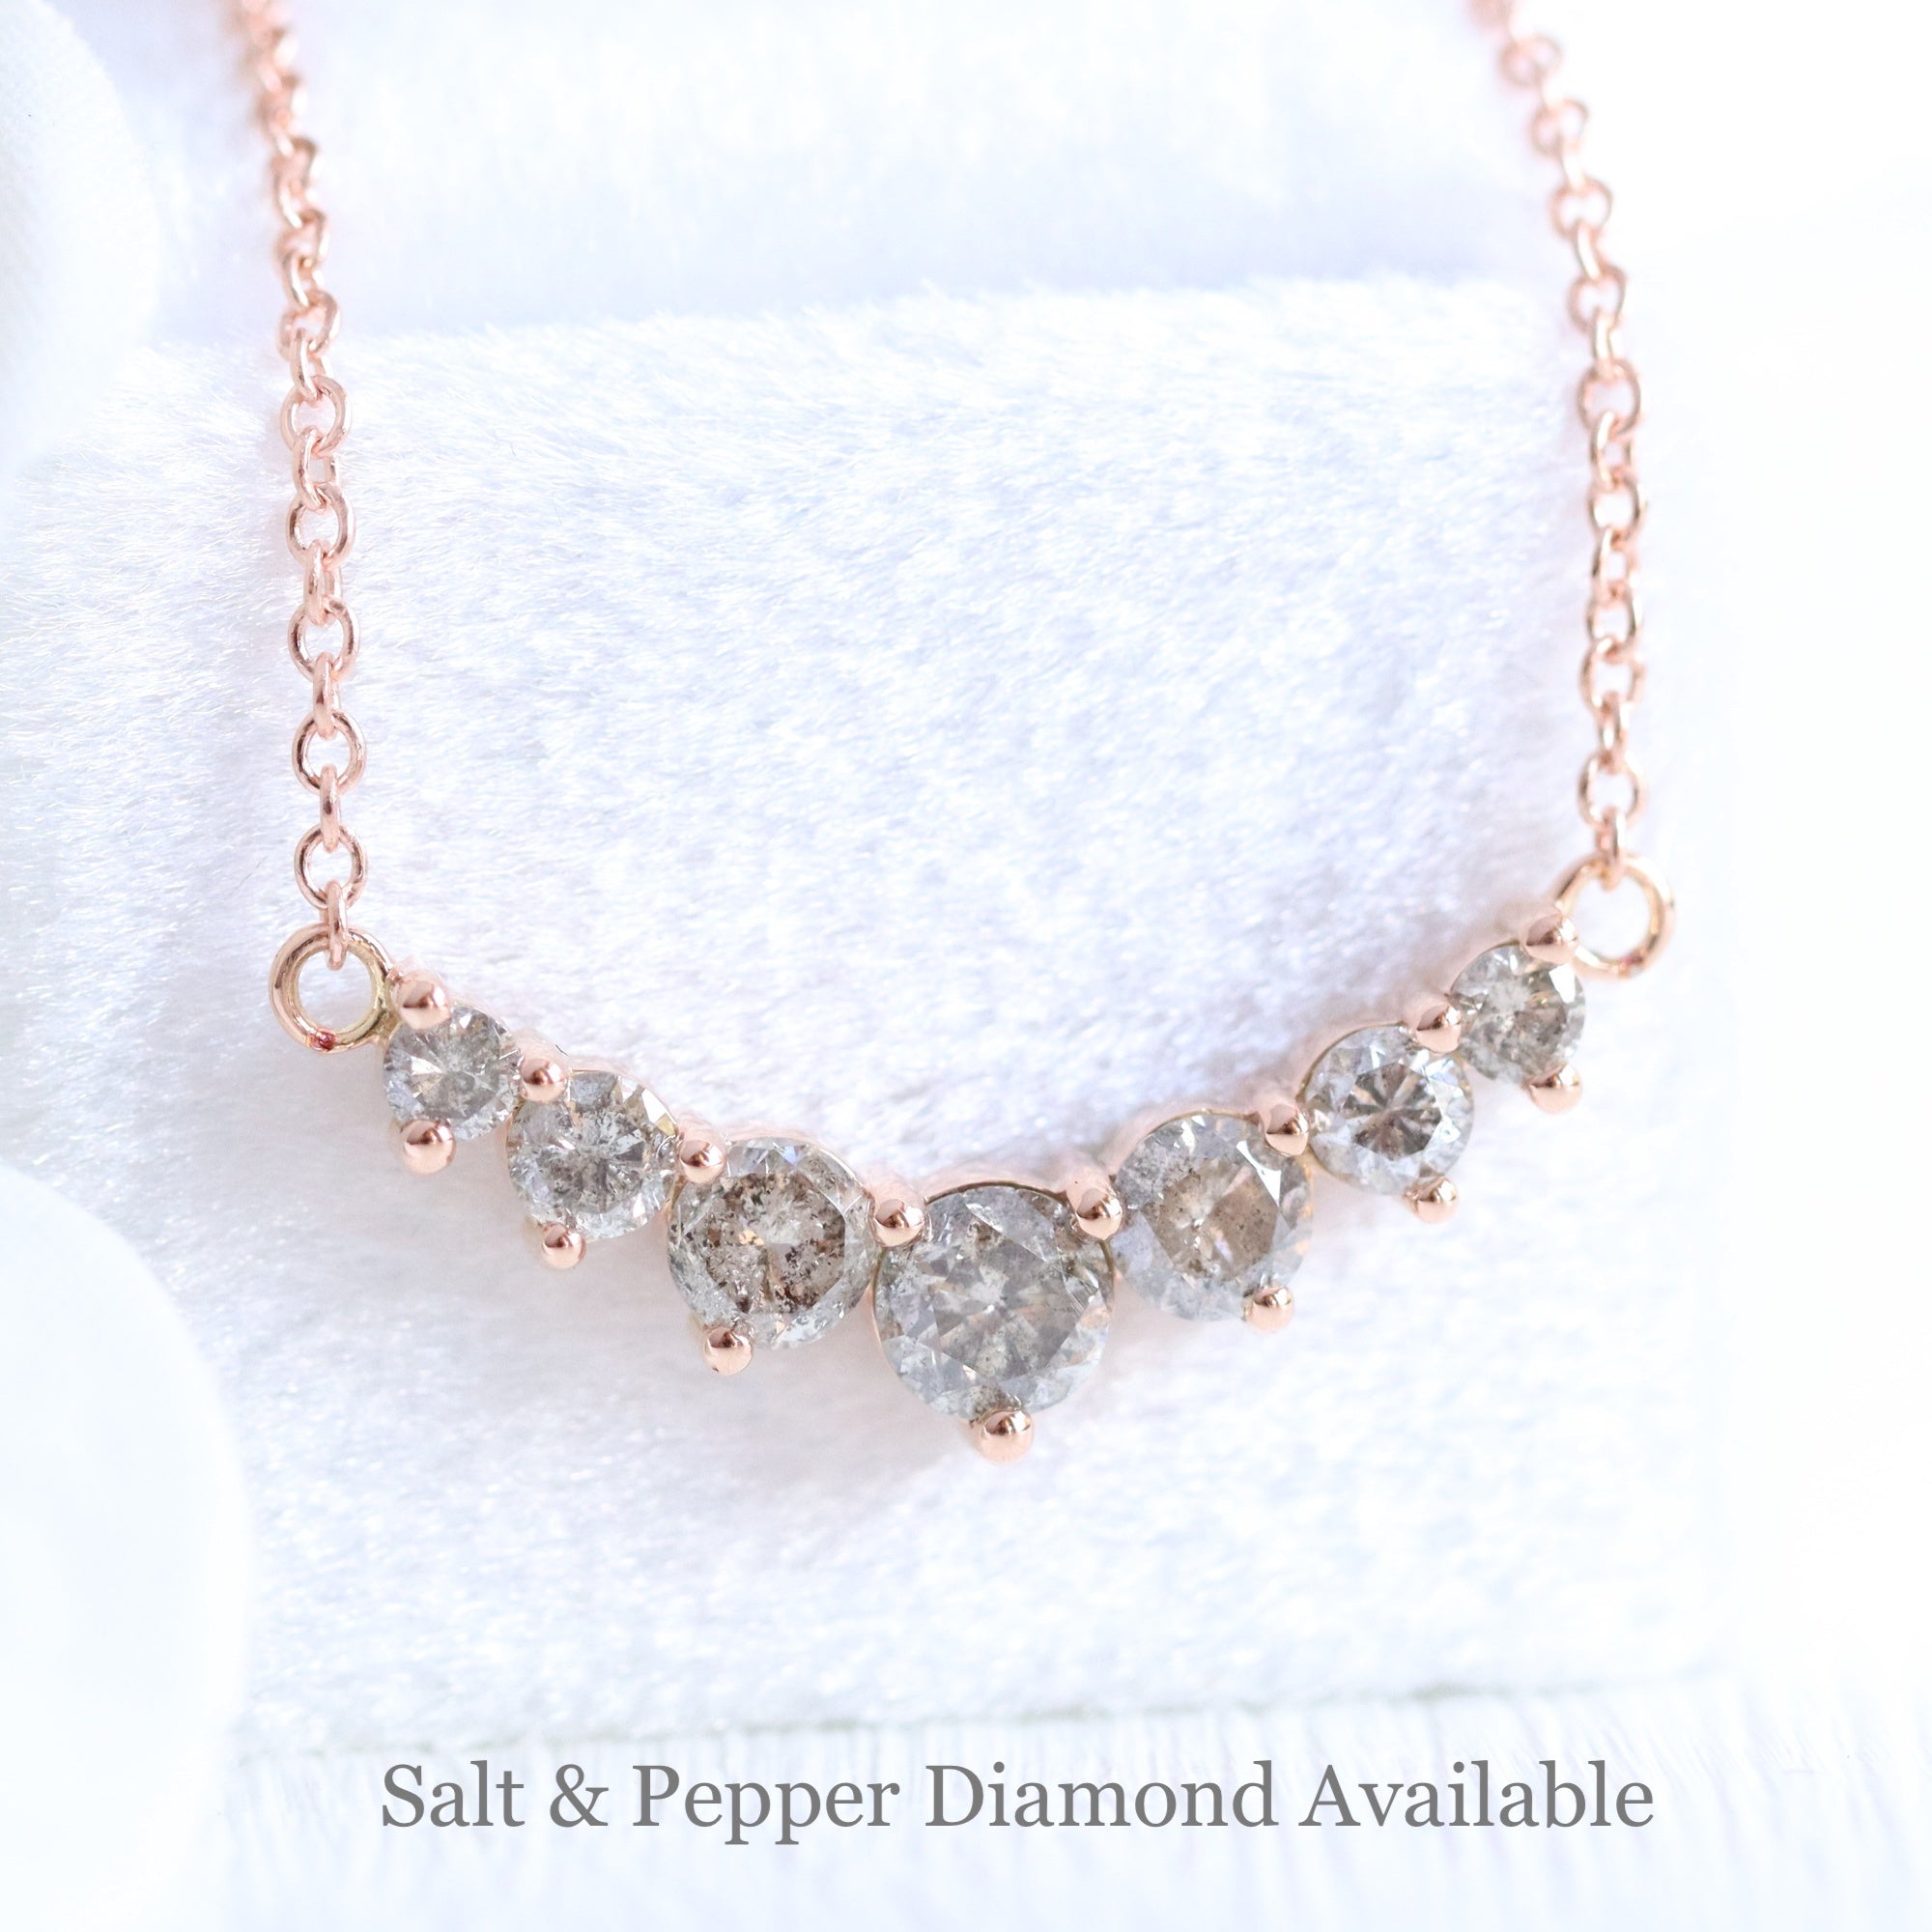 7 salt and pepper diamond necklace rose gold drop pendant chain la more design jewelry